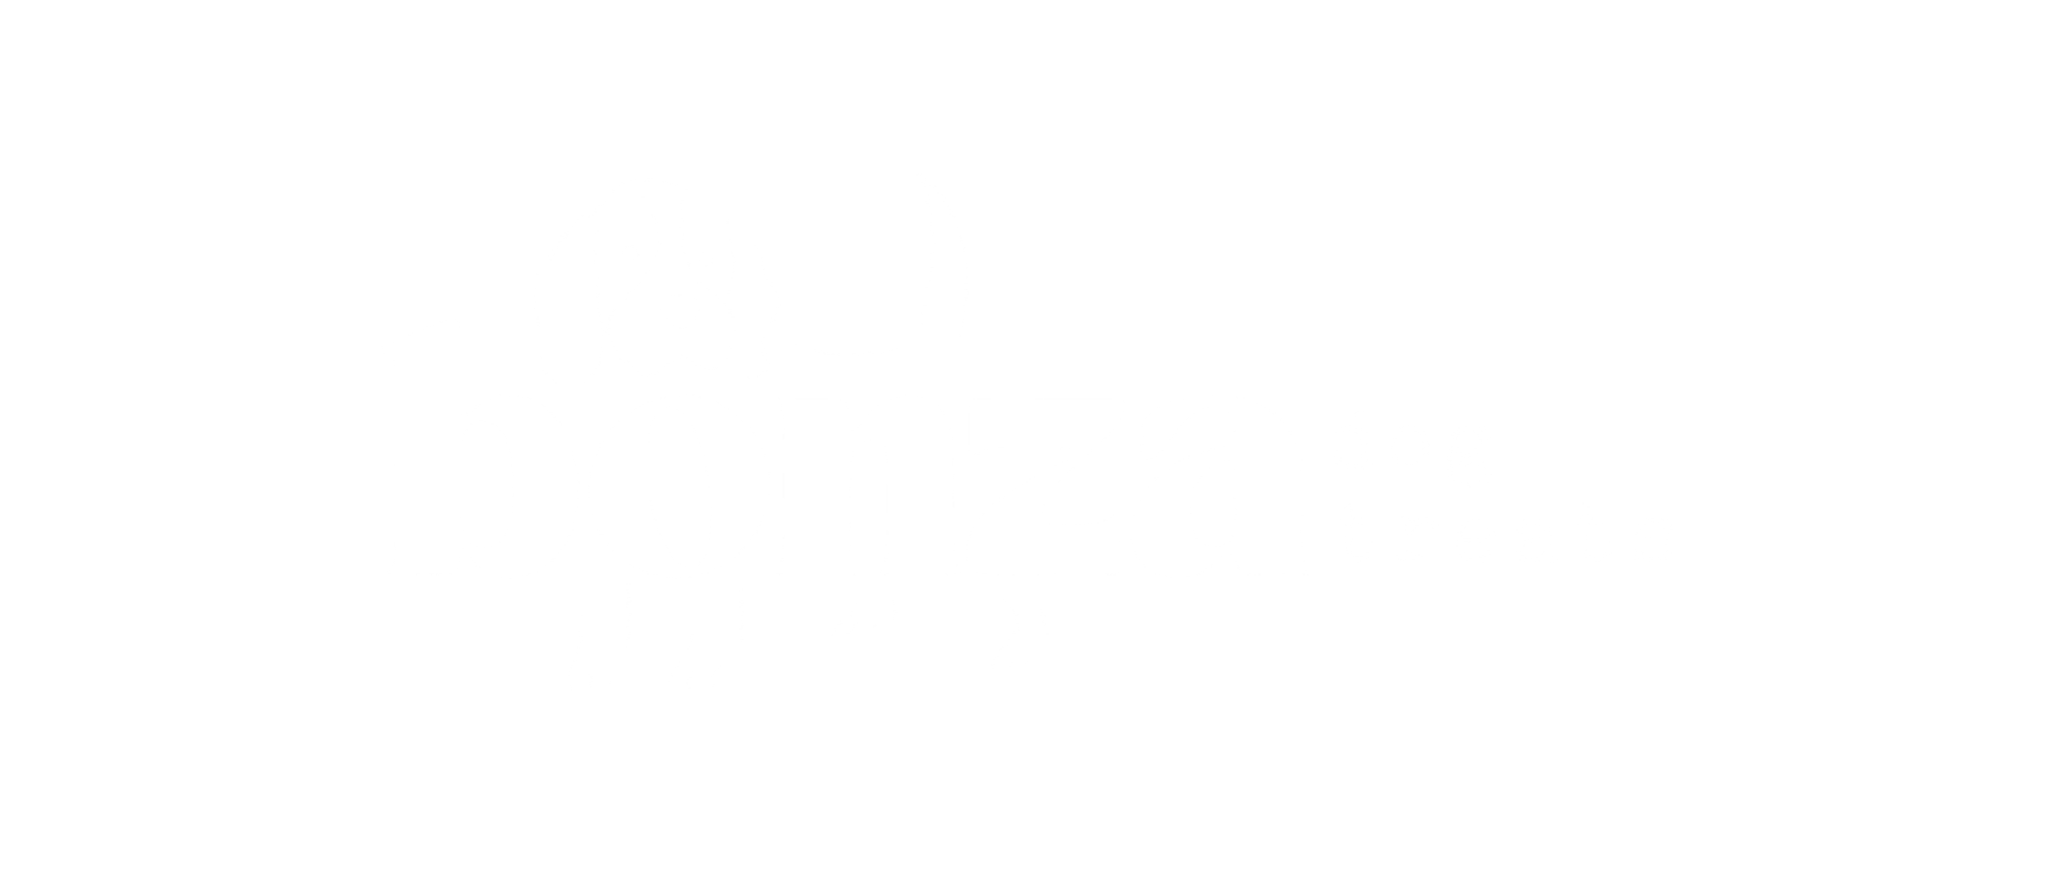 BONZA DOG TREATS LOGO IN WHITE WITH TAGLINE